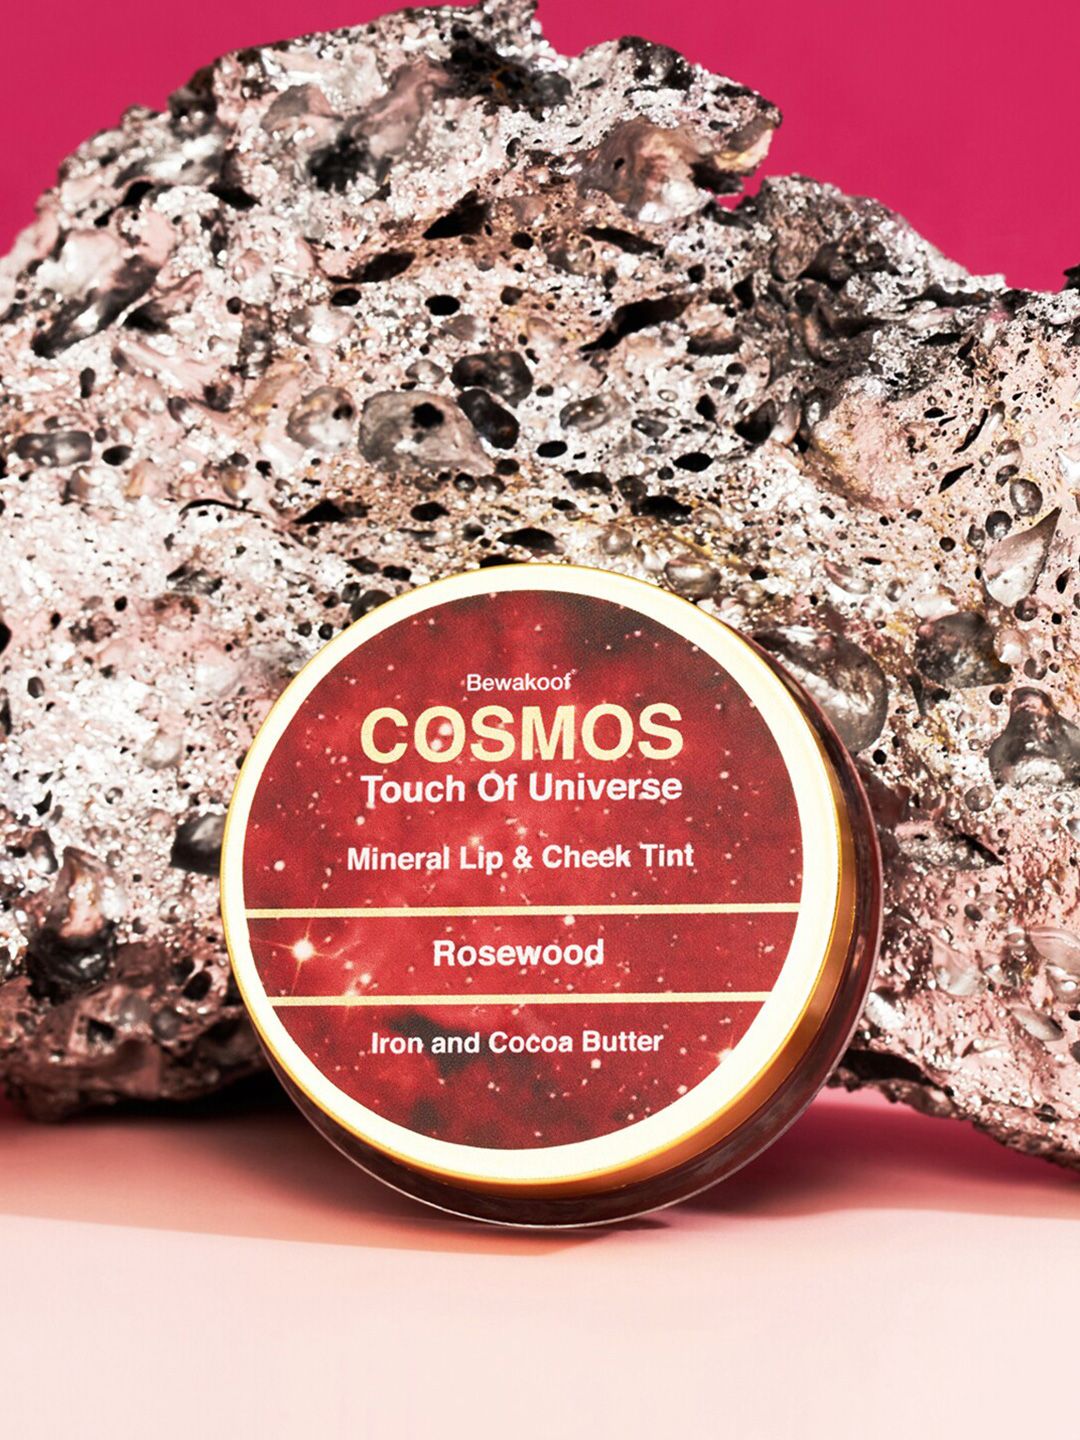 BEWAKOOF COSMOS Mineral Lip & Cheek Tint - Rosewood Price in India